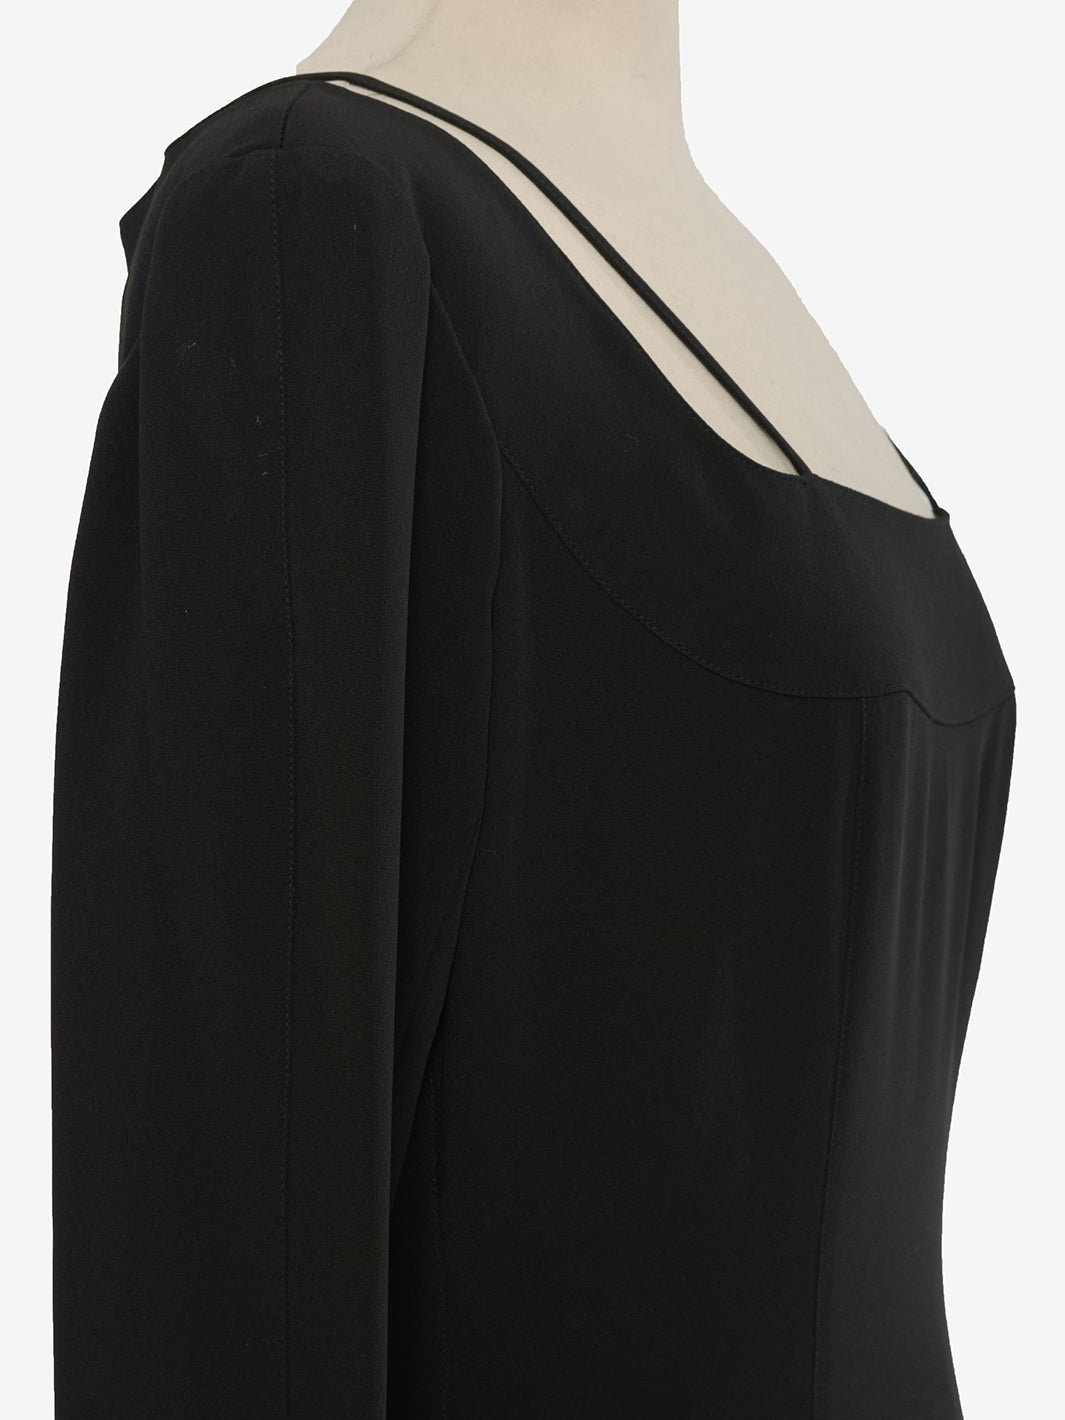 Thierry Mugler Black Long Dress - '90s